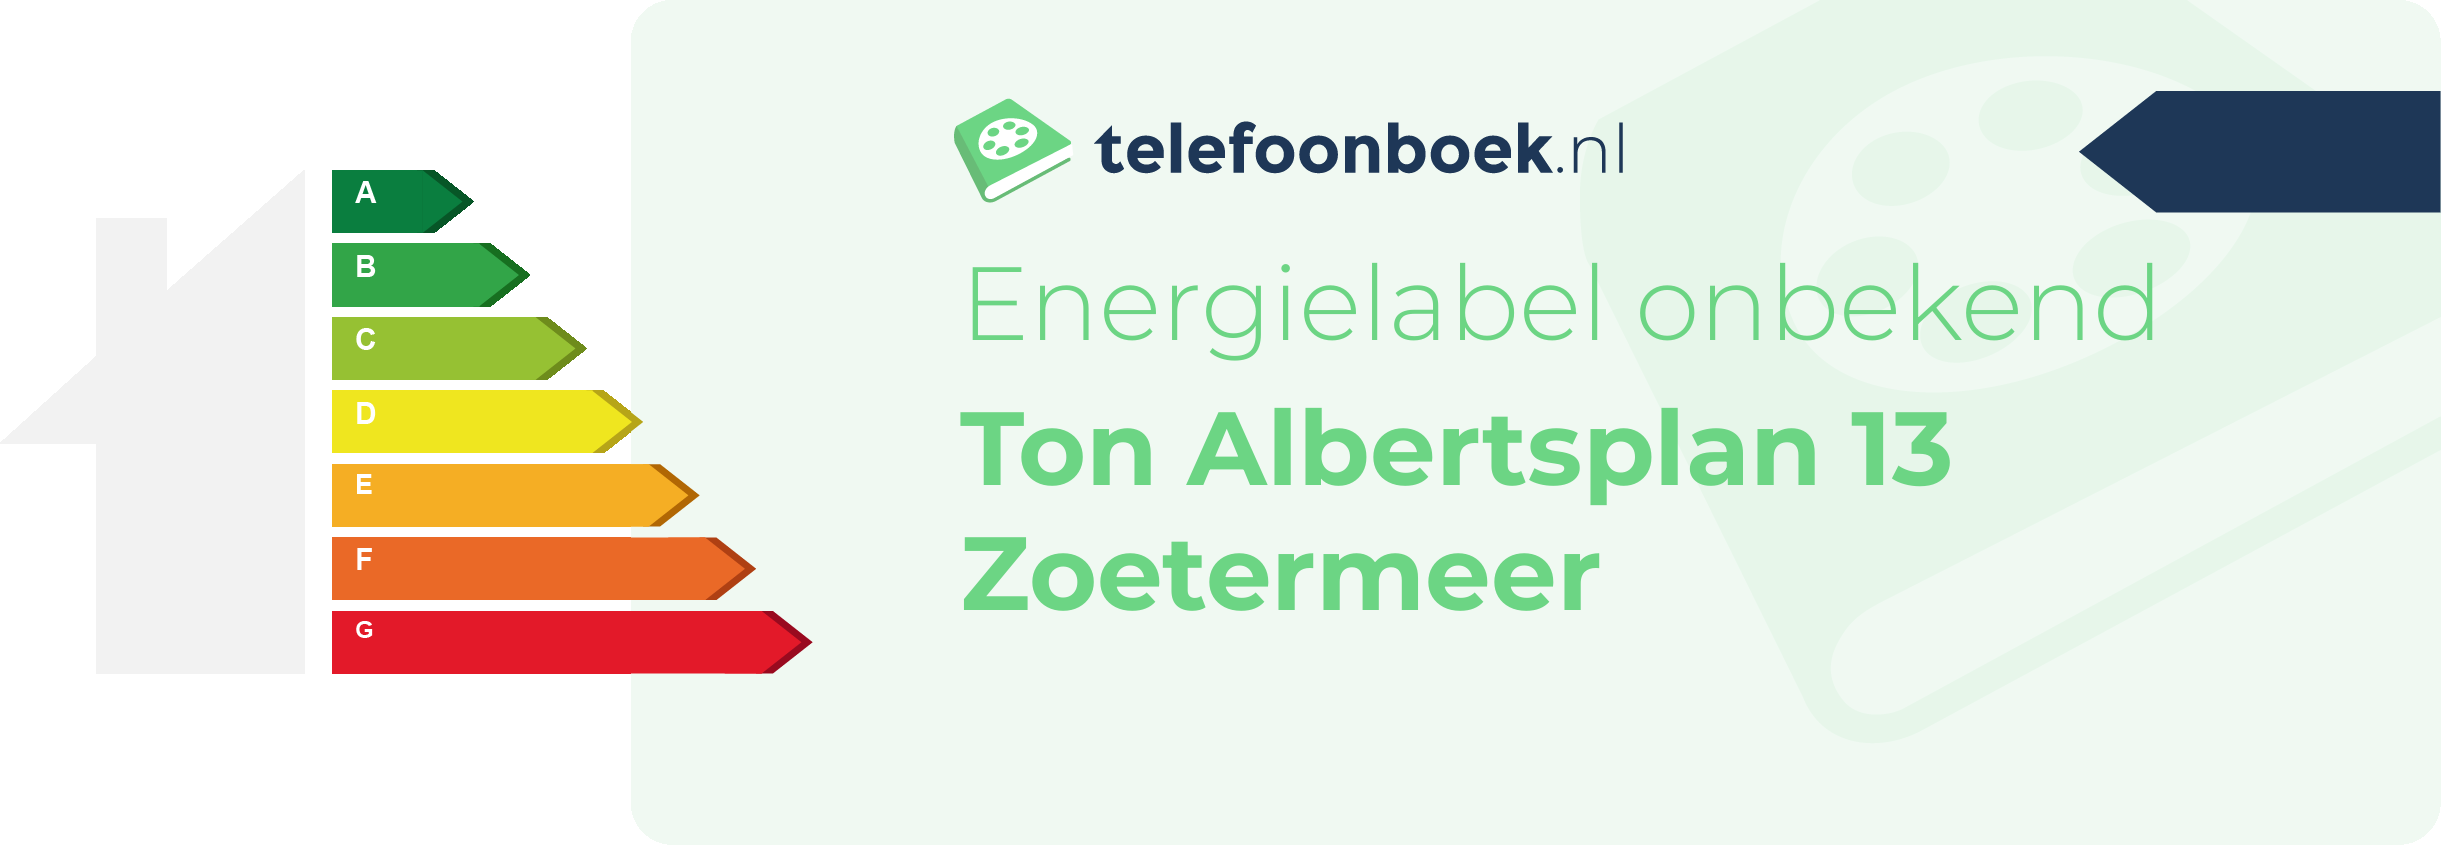 Energielabel Ton Albertsplan 13 Zoetermeer